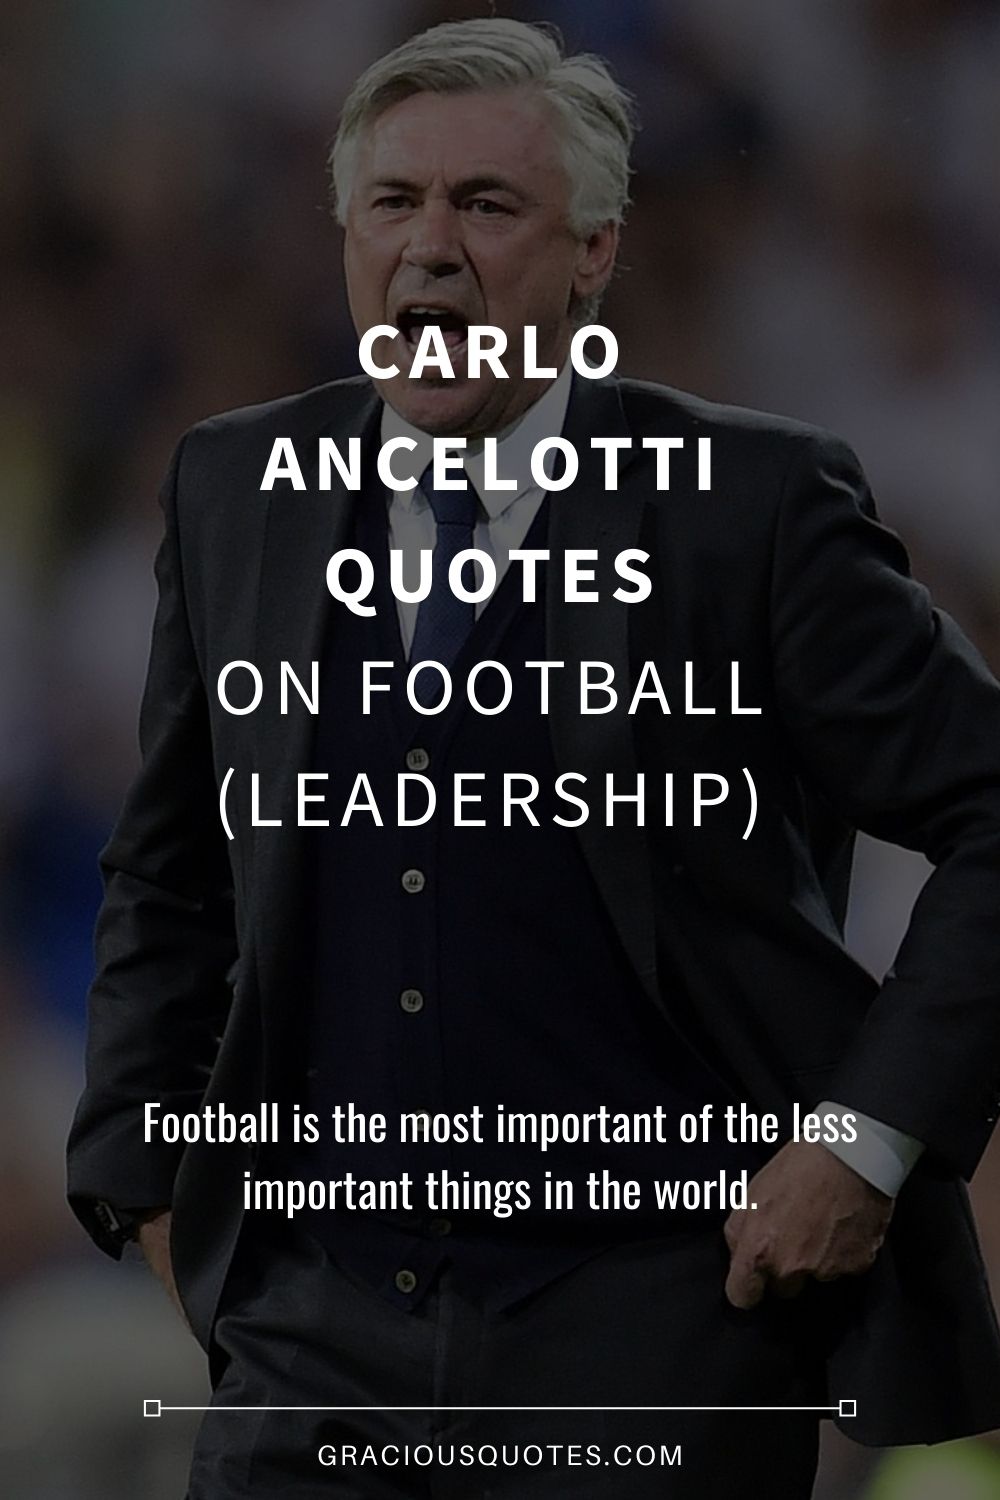 Carlo Ancelotti Quotes on Football (LEADERSHIP) - Gracious Quotes